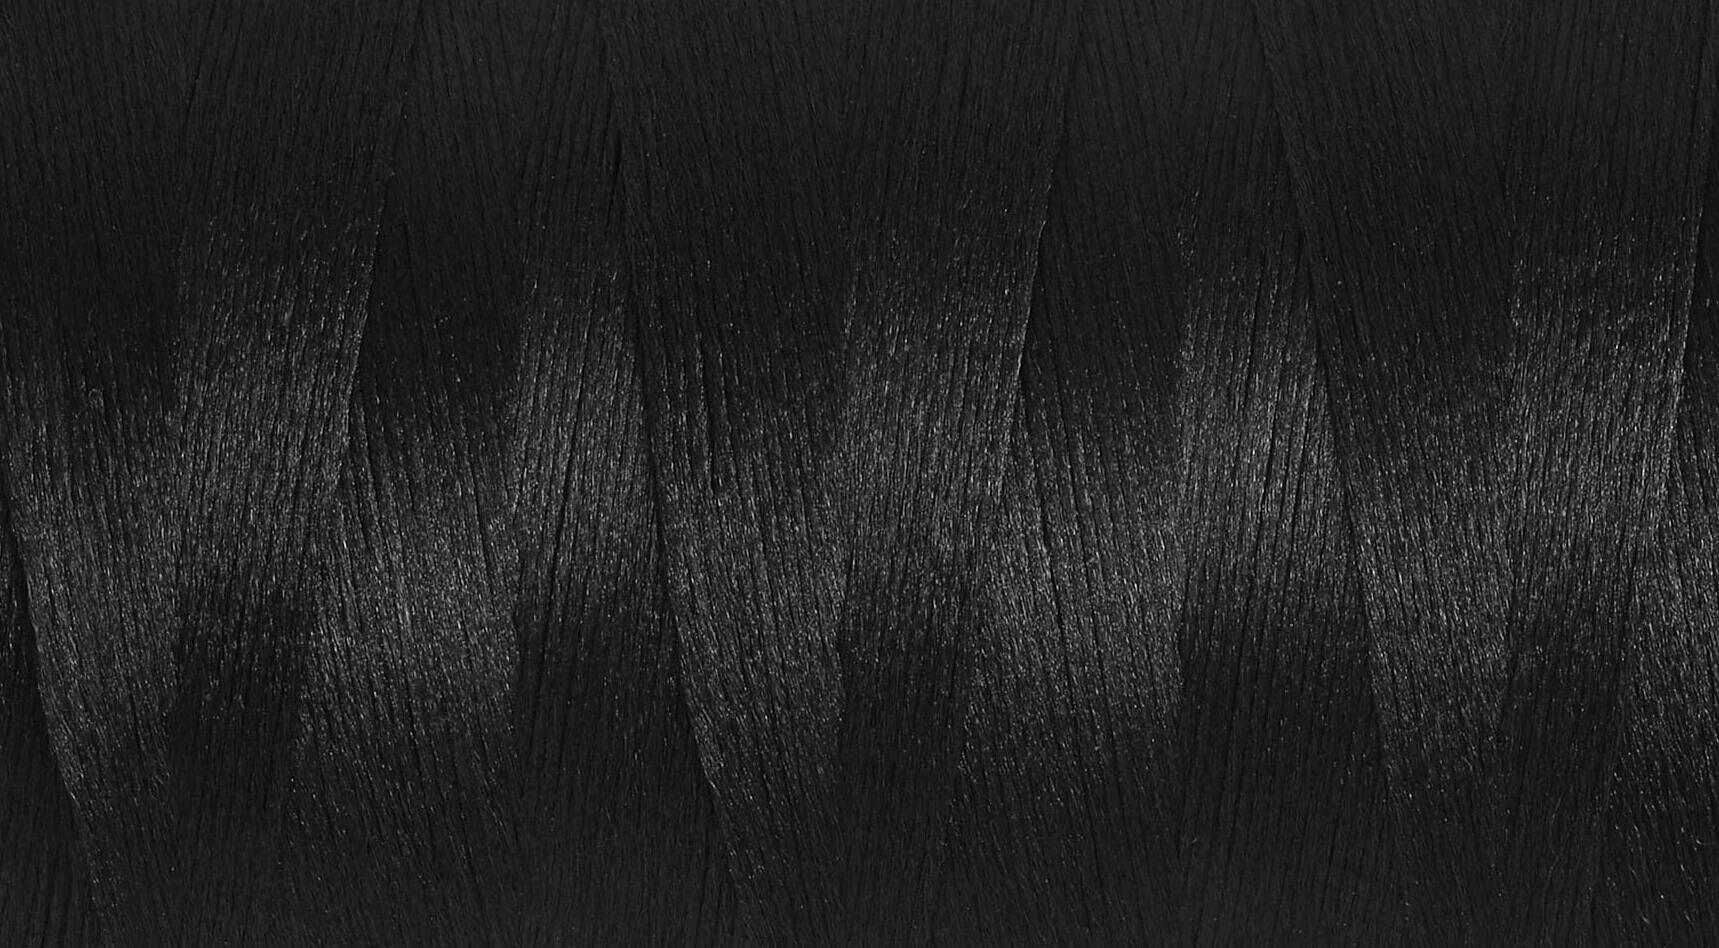 Gutermann Bulky-lock 160 2000m overlocking thread in colour number 000 Black